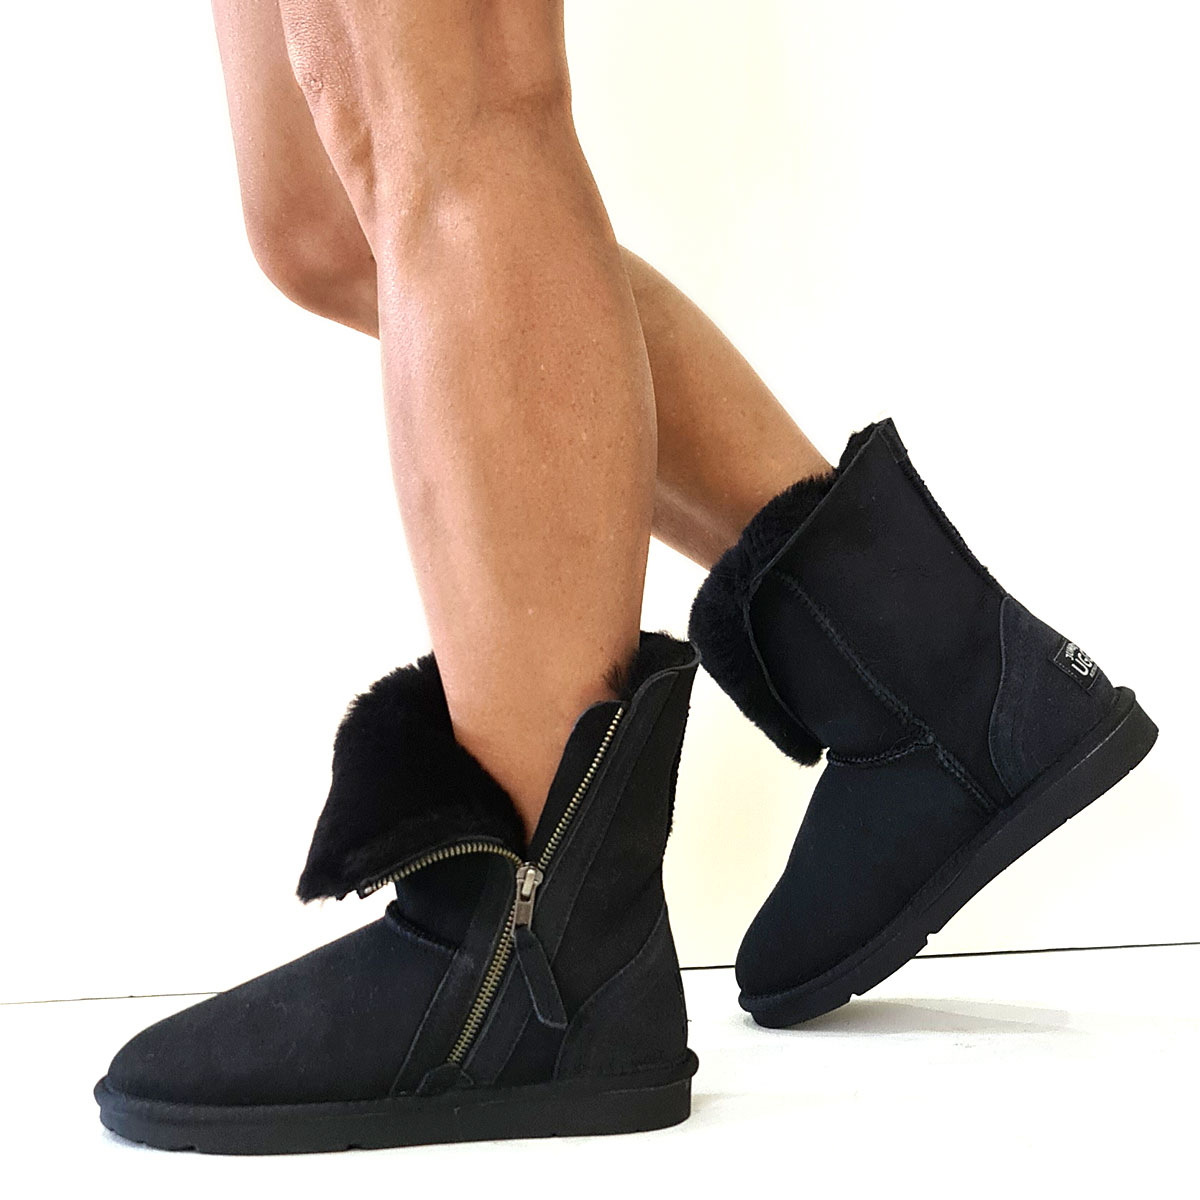 Zip Classic Short Ugg Boots - Black